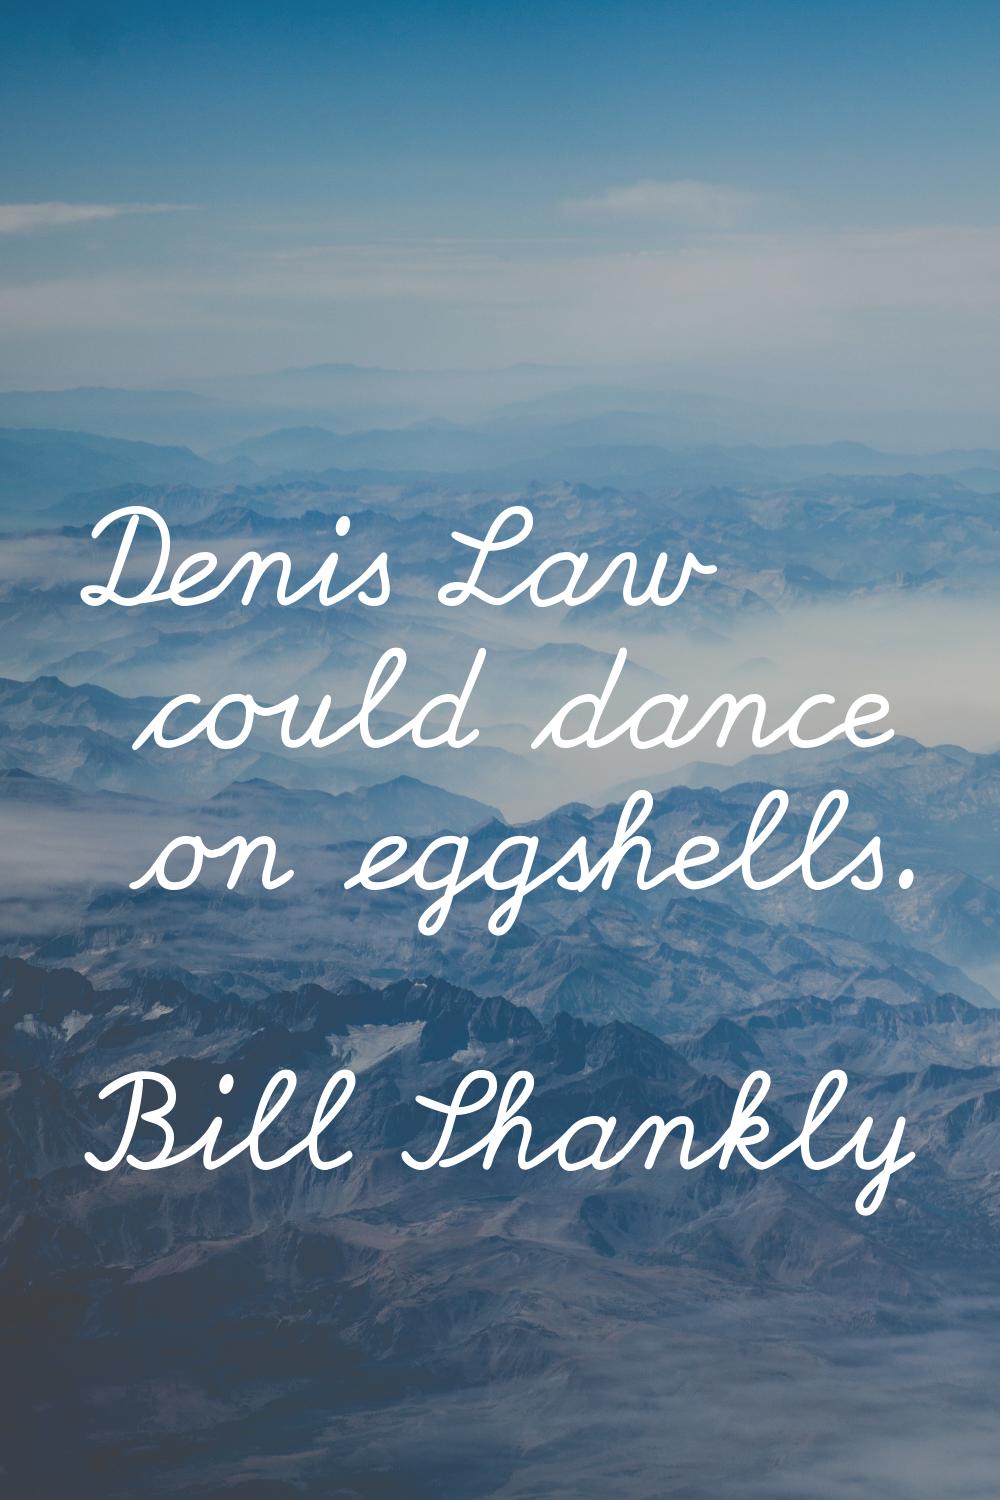 Denis Law could dance on eggshells.